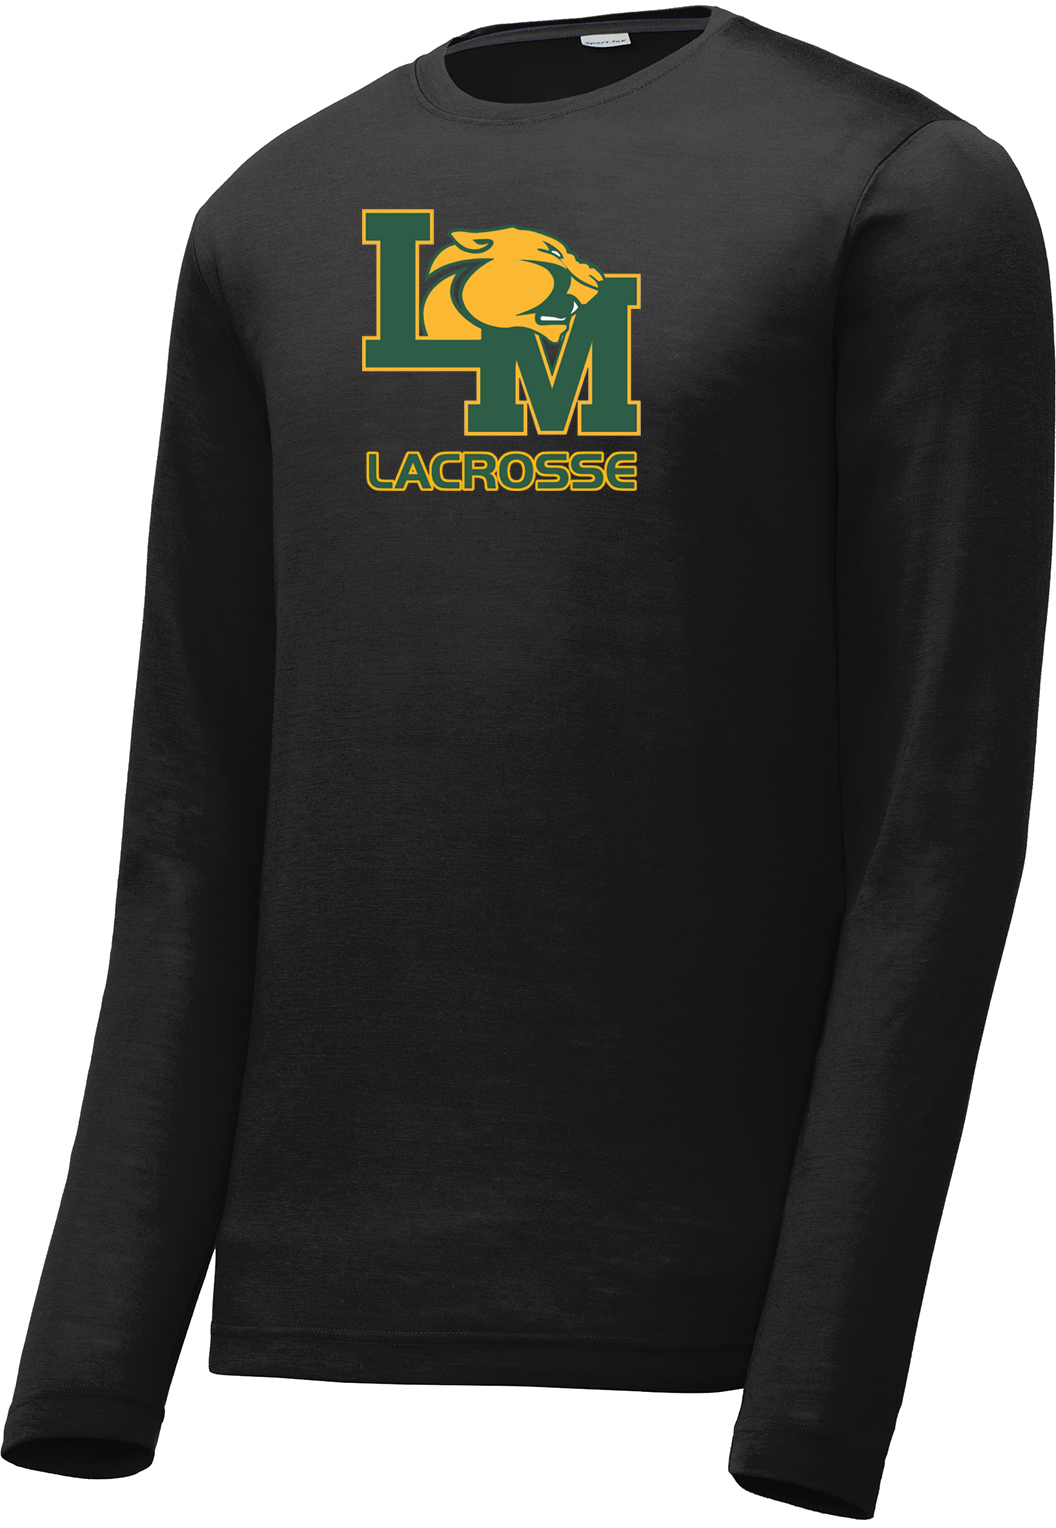 Little Miami Lacrosse Black Long Sleeve CottonTouch Performance Shirt